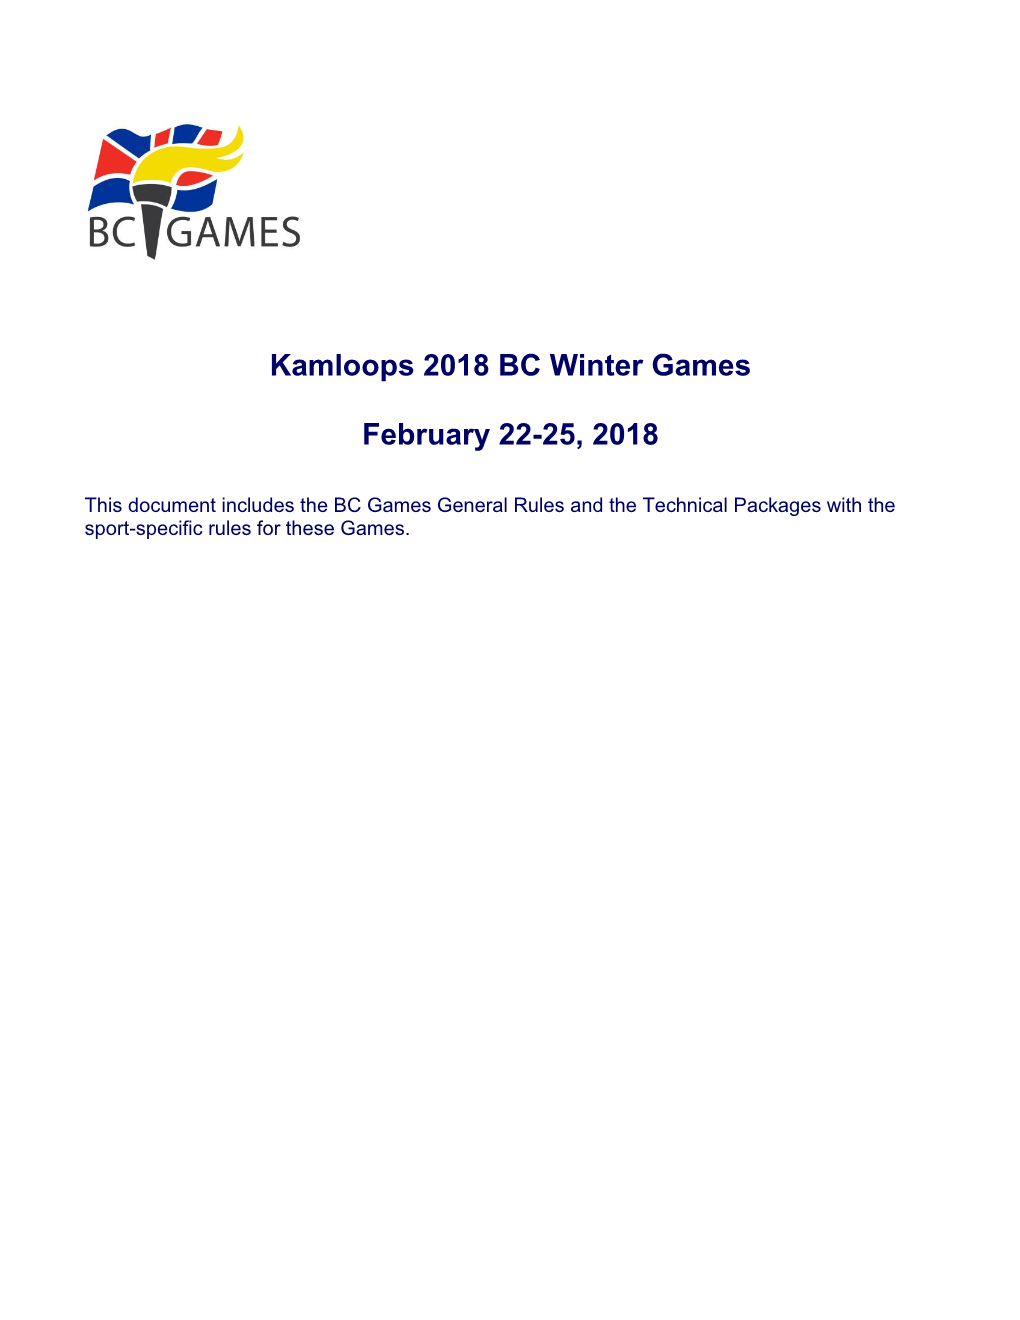 2018 BC Winter Games